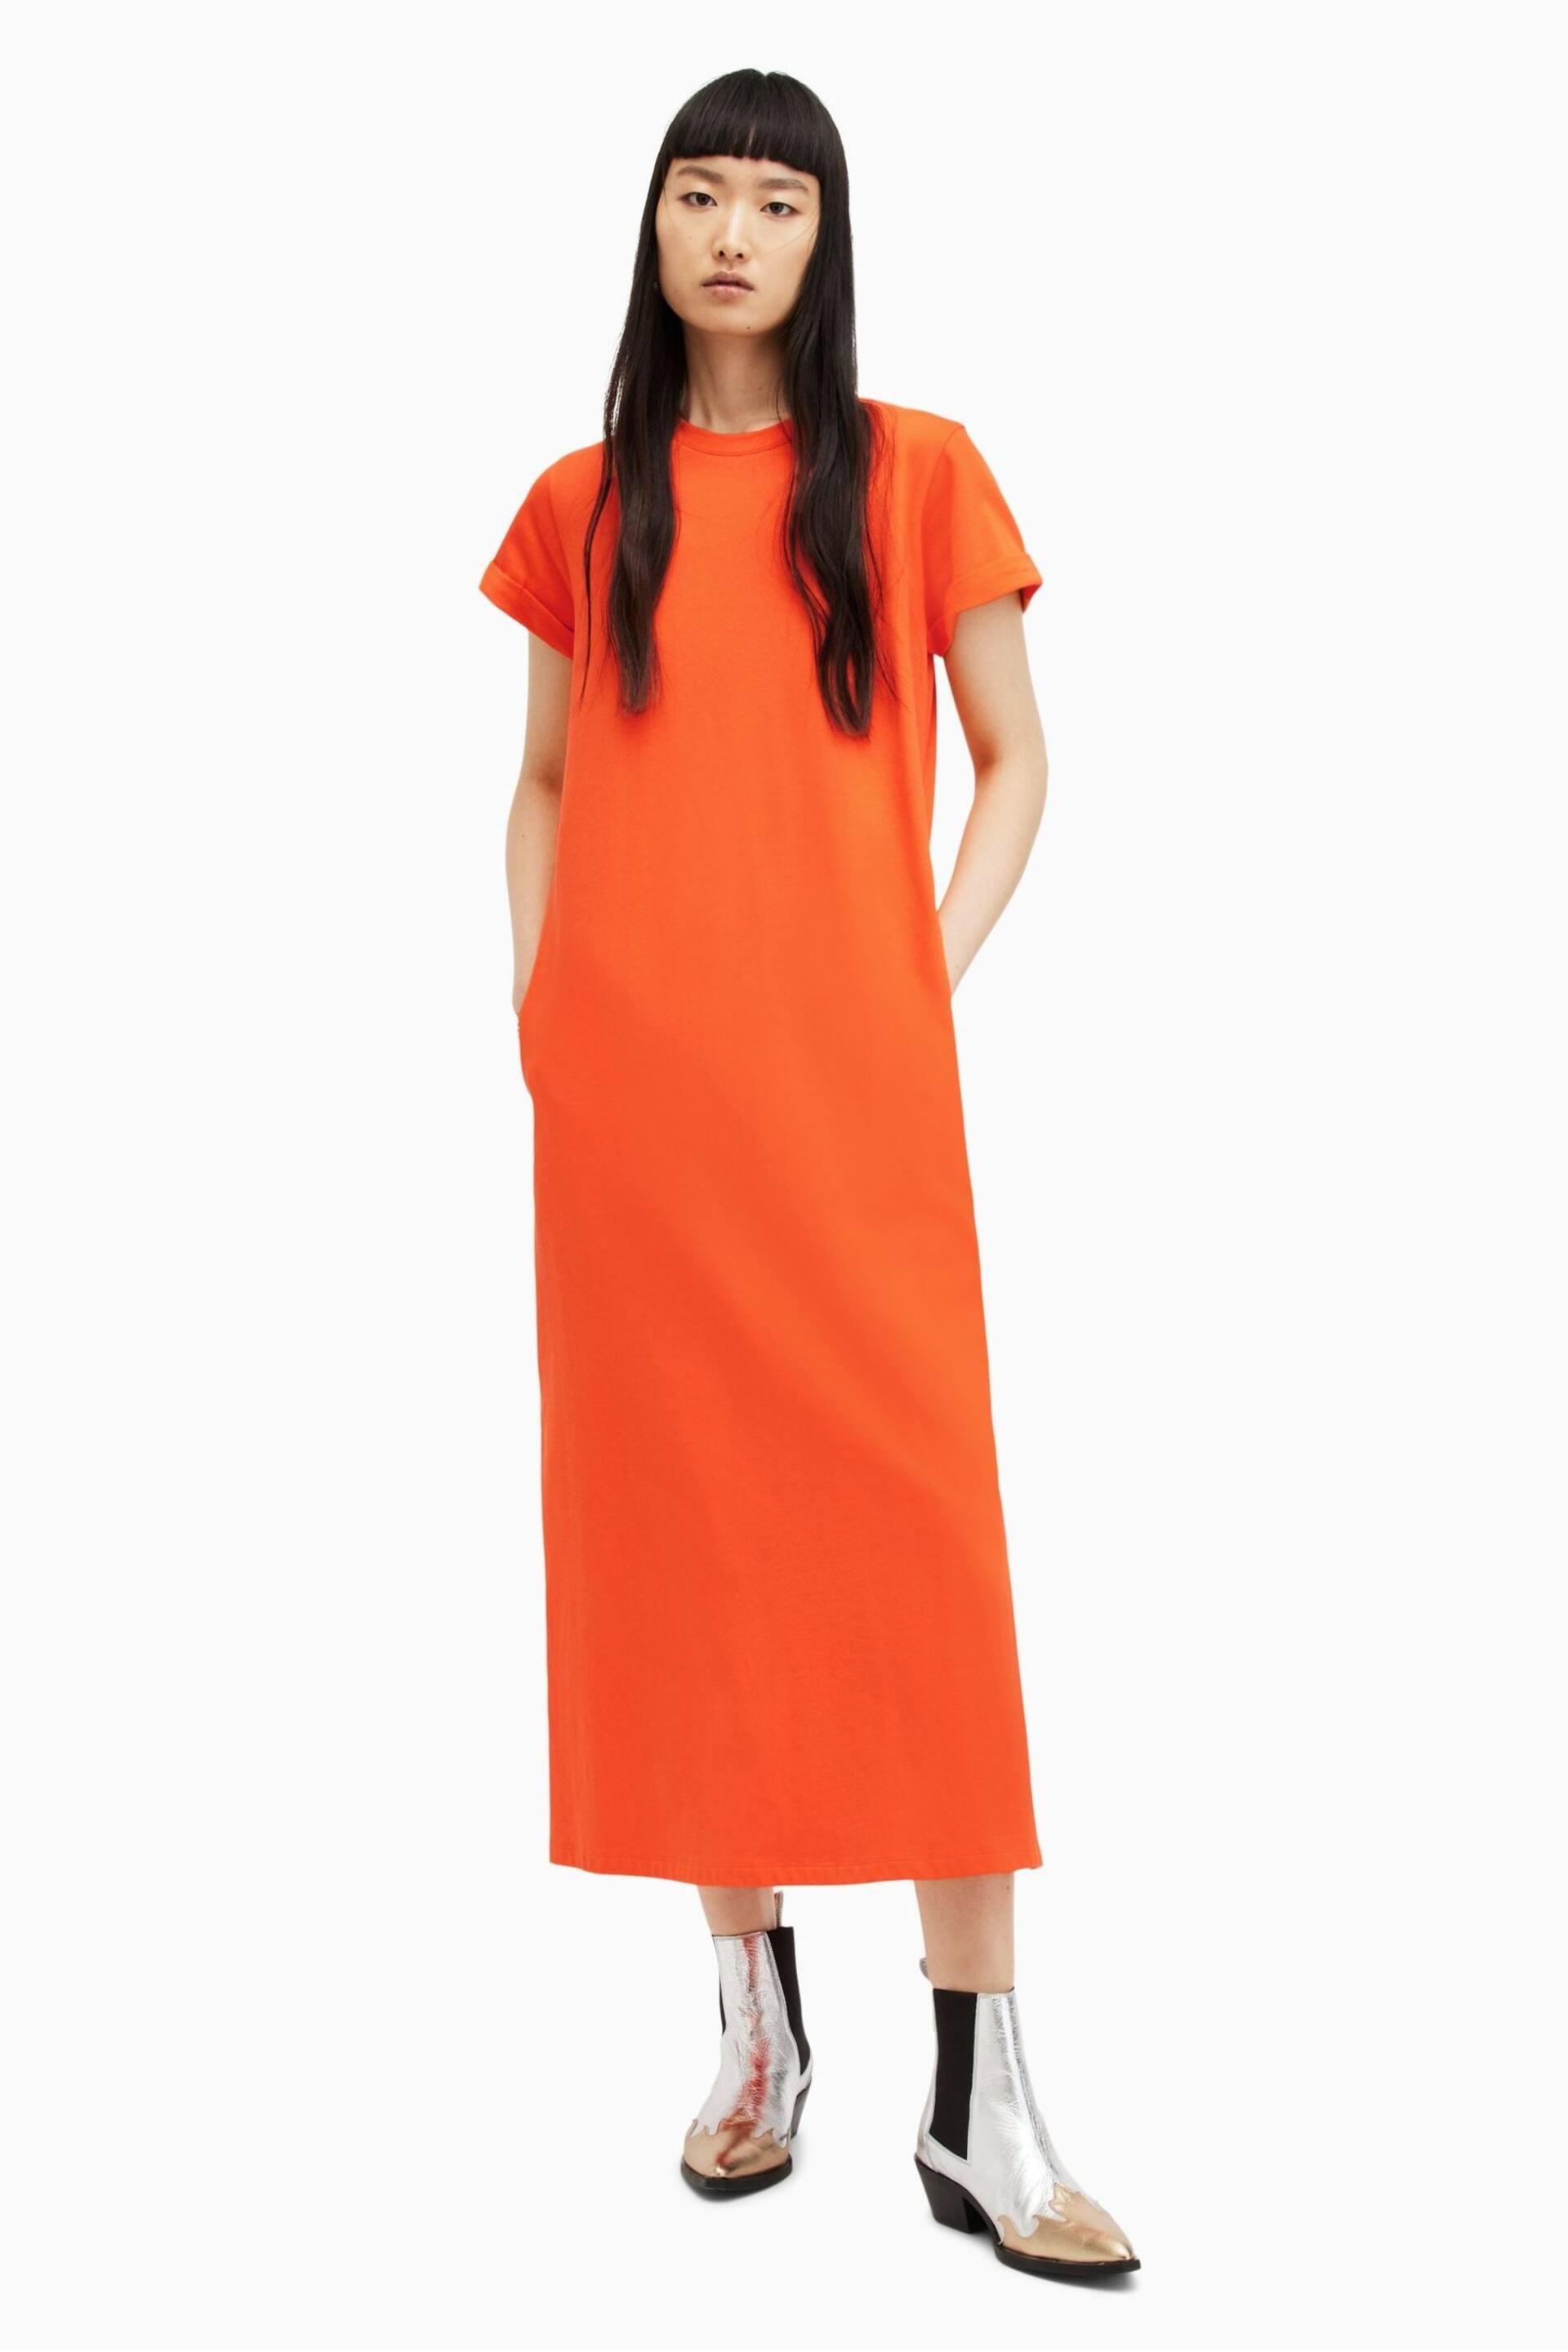 AllSaints Orange Anna Maxi Dress - Image 1 of 5